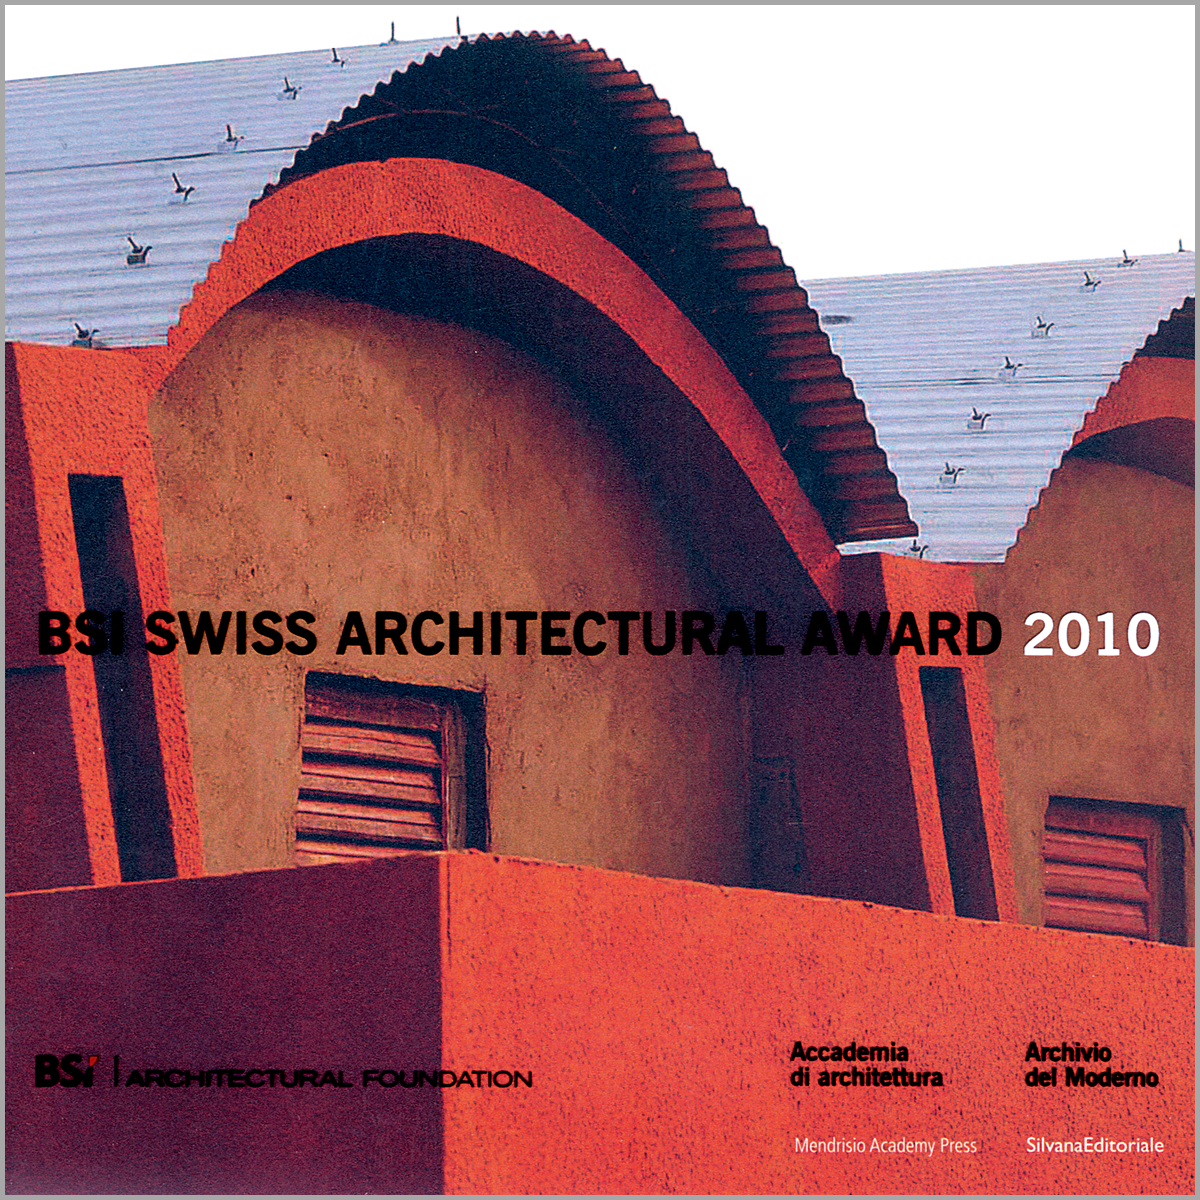 BSI Swiss Architectural Award 2010